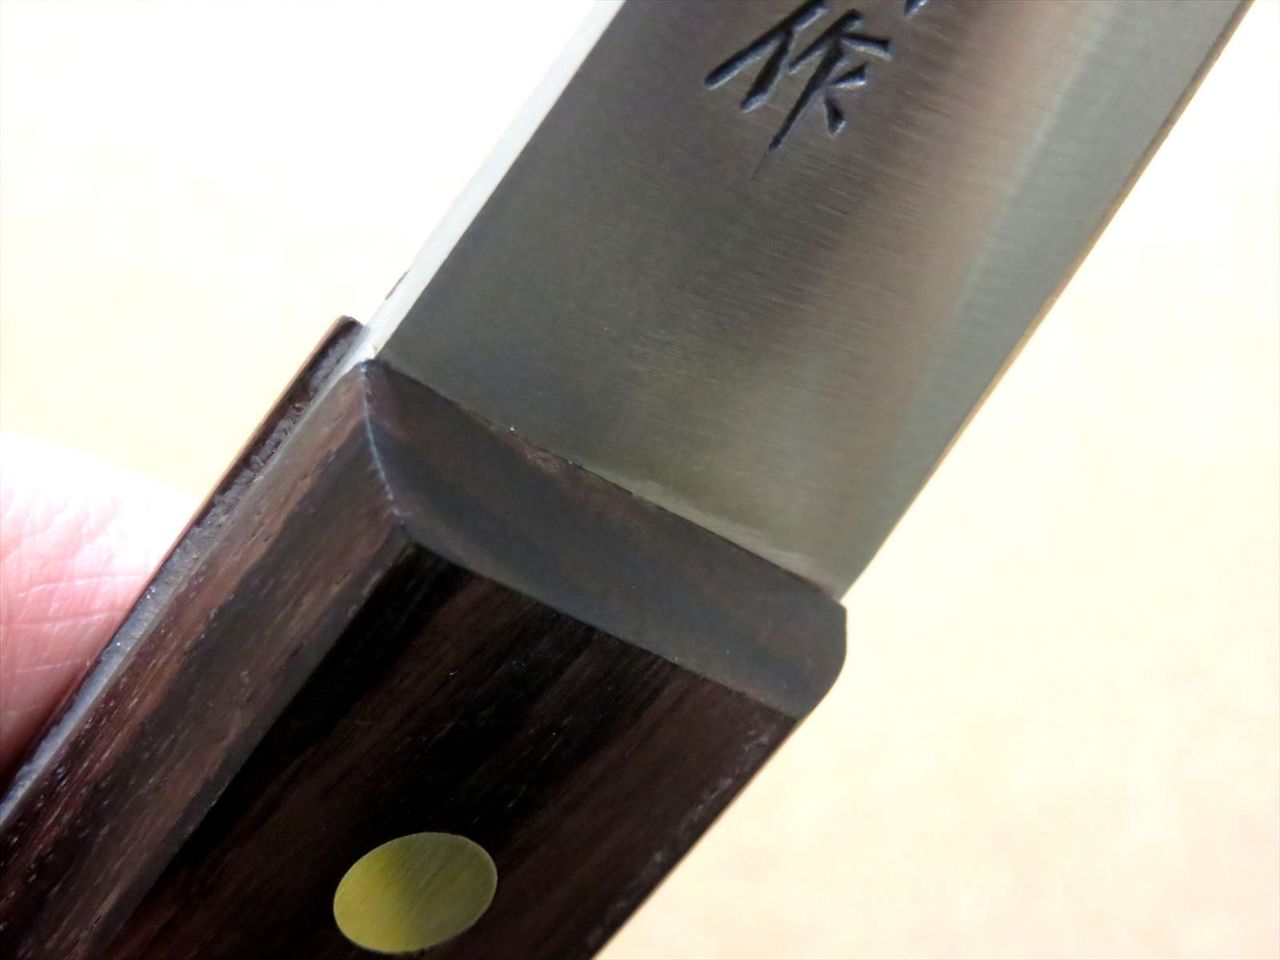 Japanese Masahiro Kitchen Gutting Knife 150mm 5.9 inch Carbon Steel SEKI JAPAN